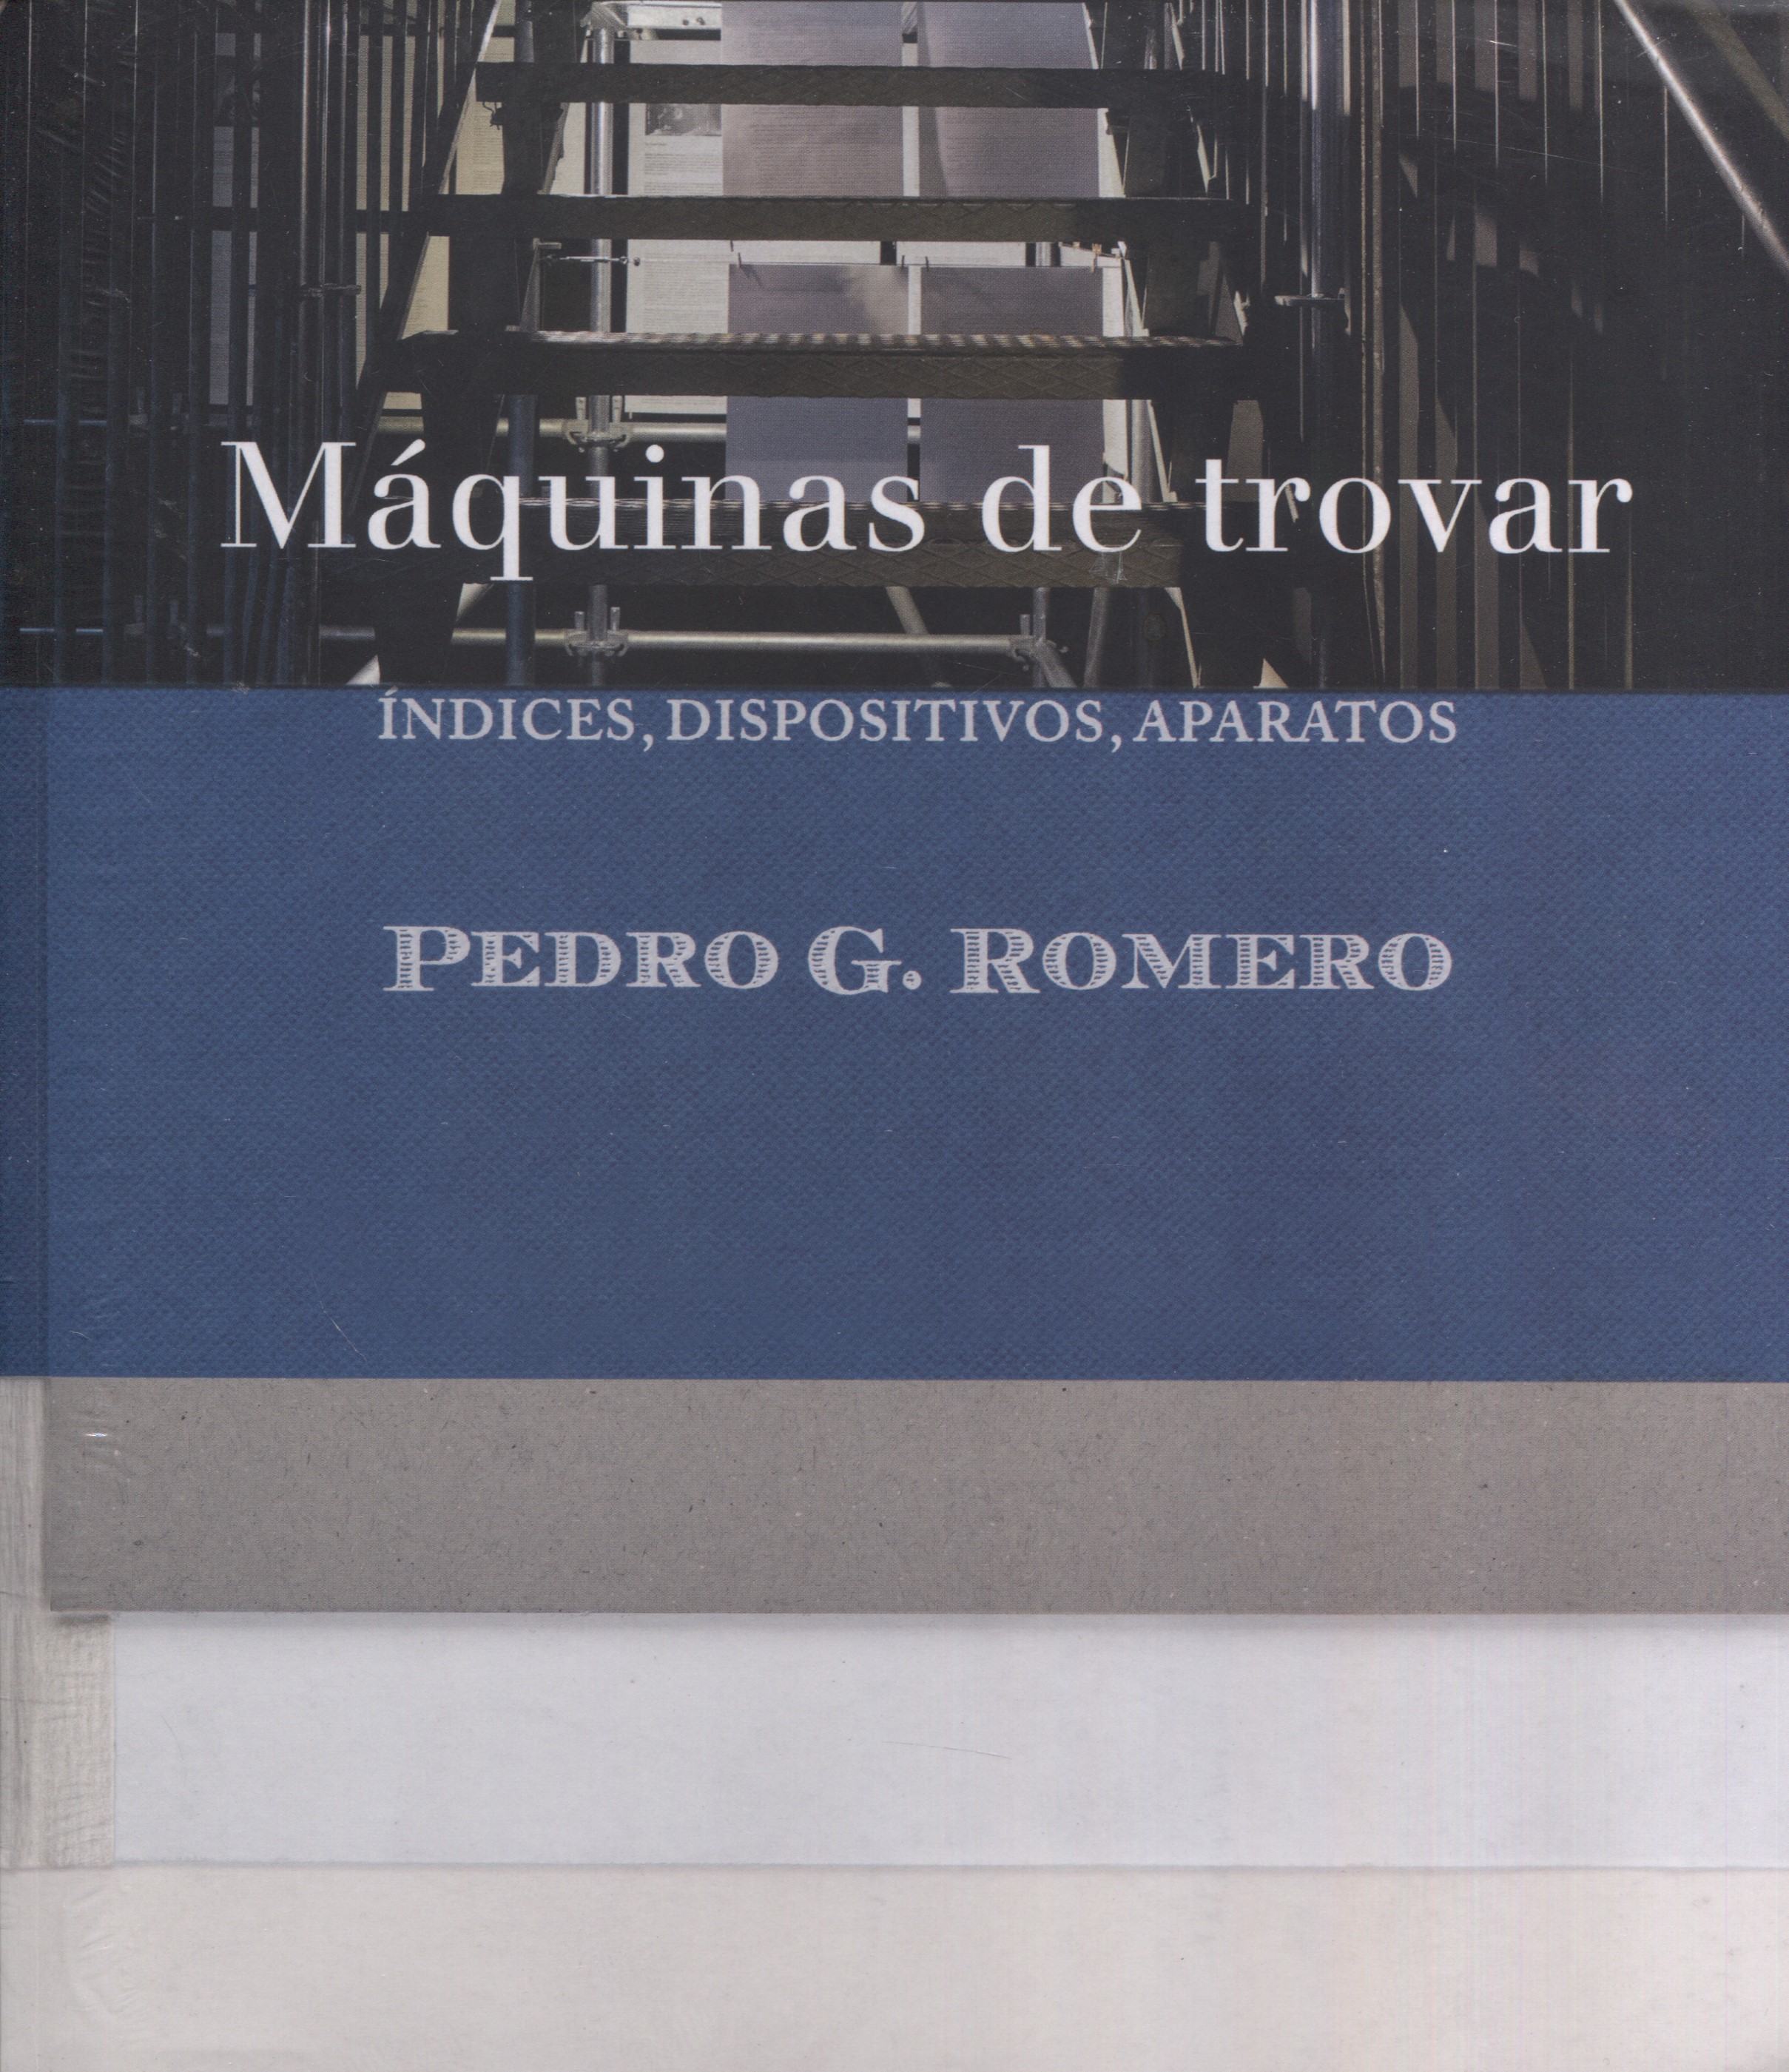 Pedro G. Romero. 9788480266321